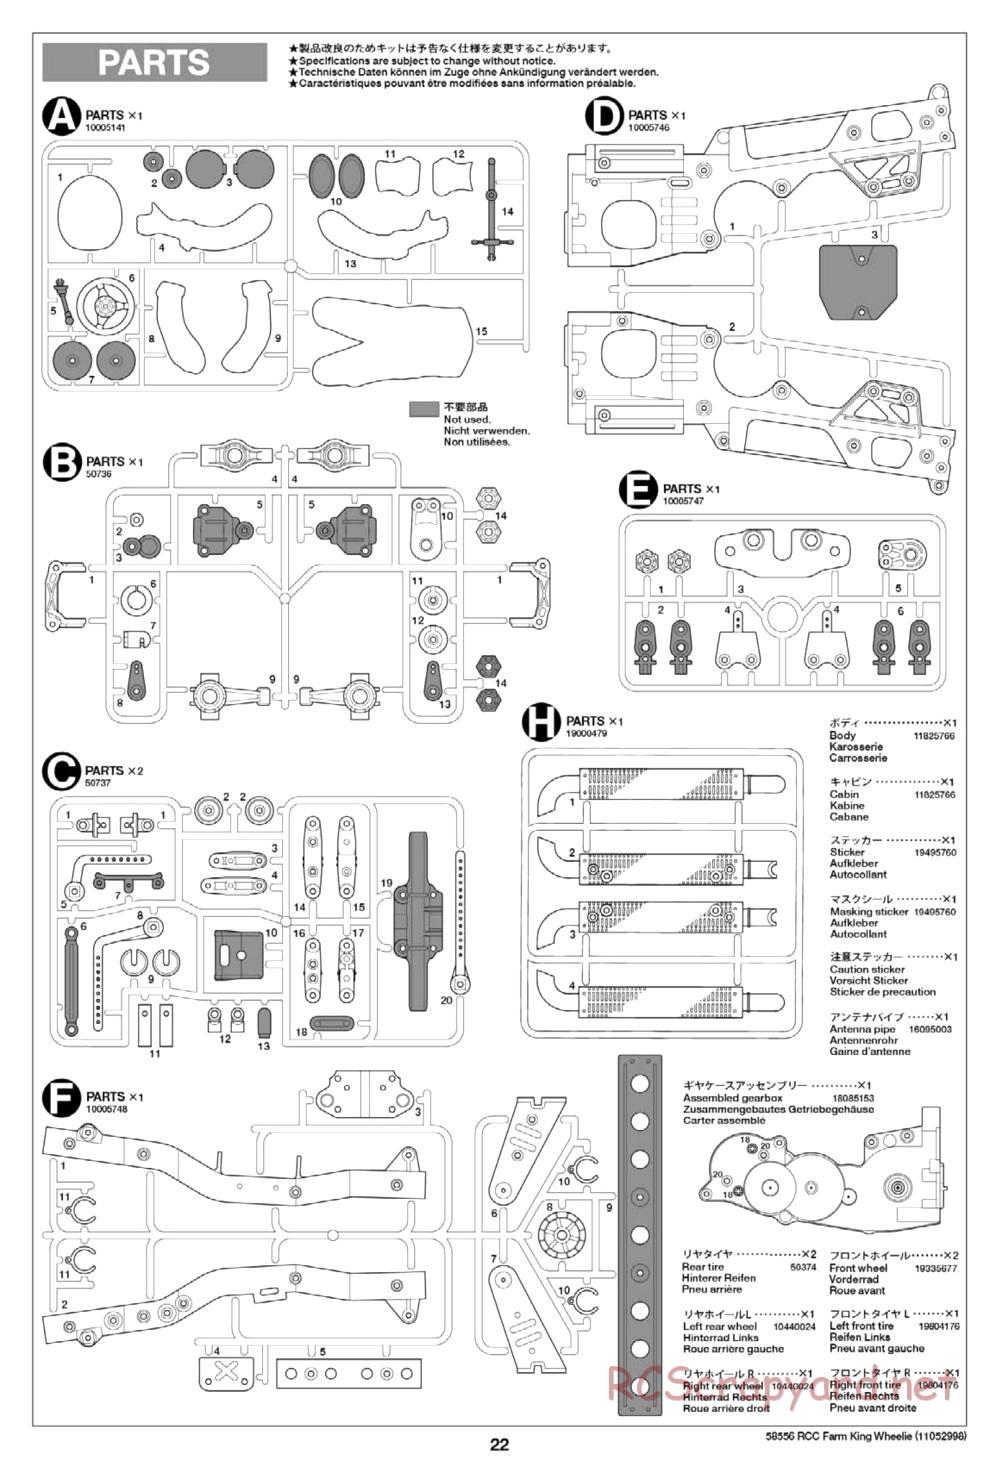 Tamiya - Farm King Wheelie Chassis - Manual - Page 22